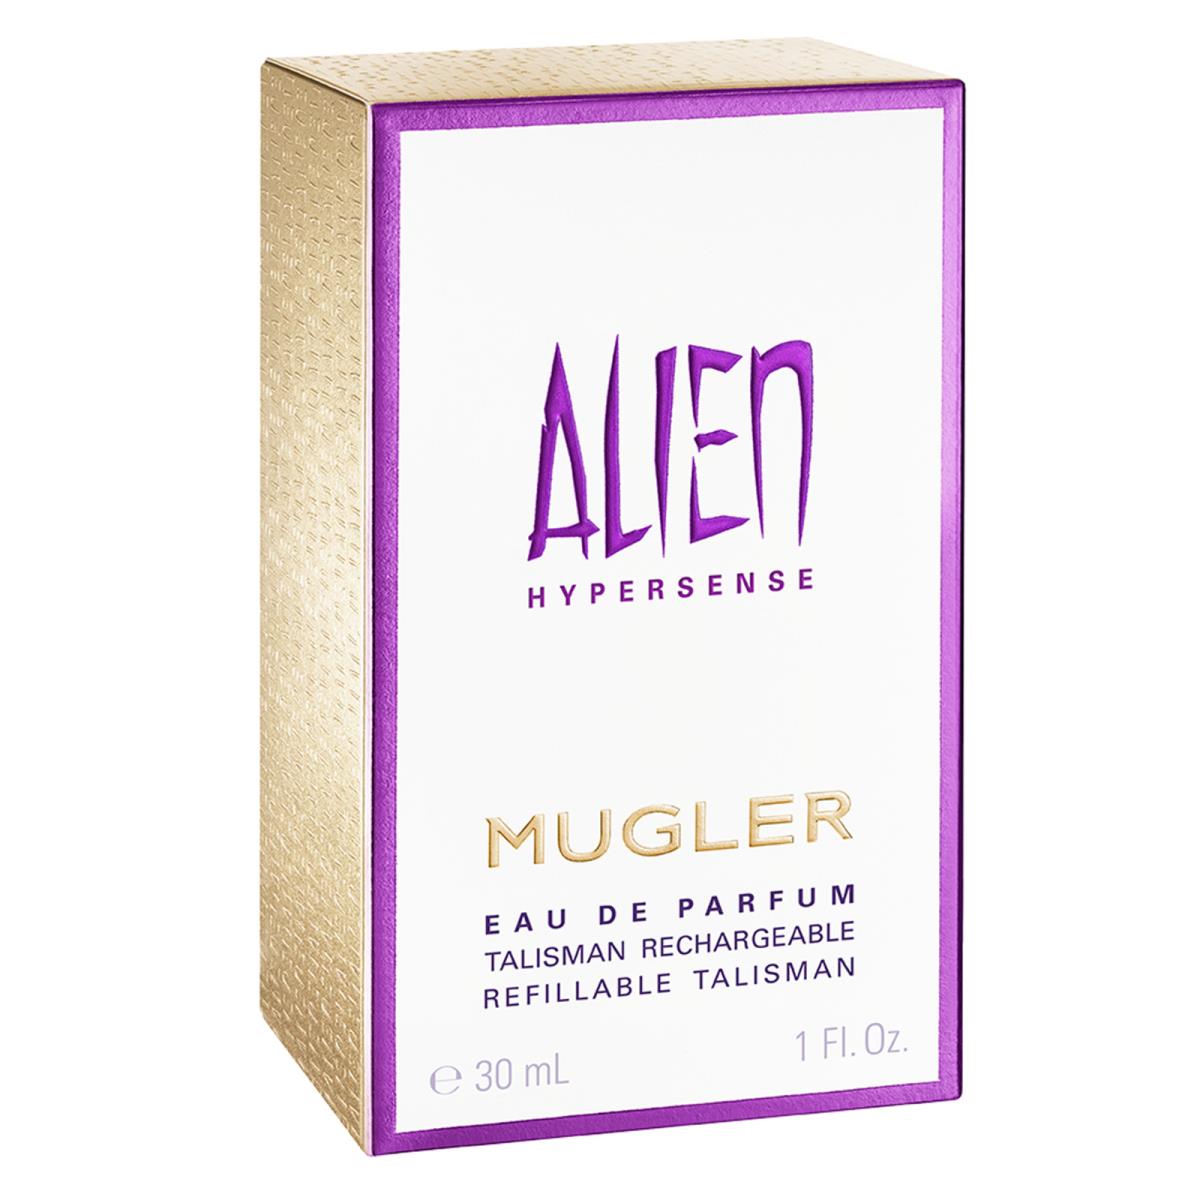 Alien Hypersense By Mugler Perfume 1.0oz / 30ml Edp Refillable Talisman